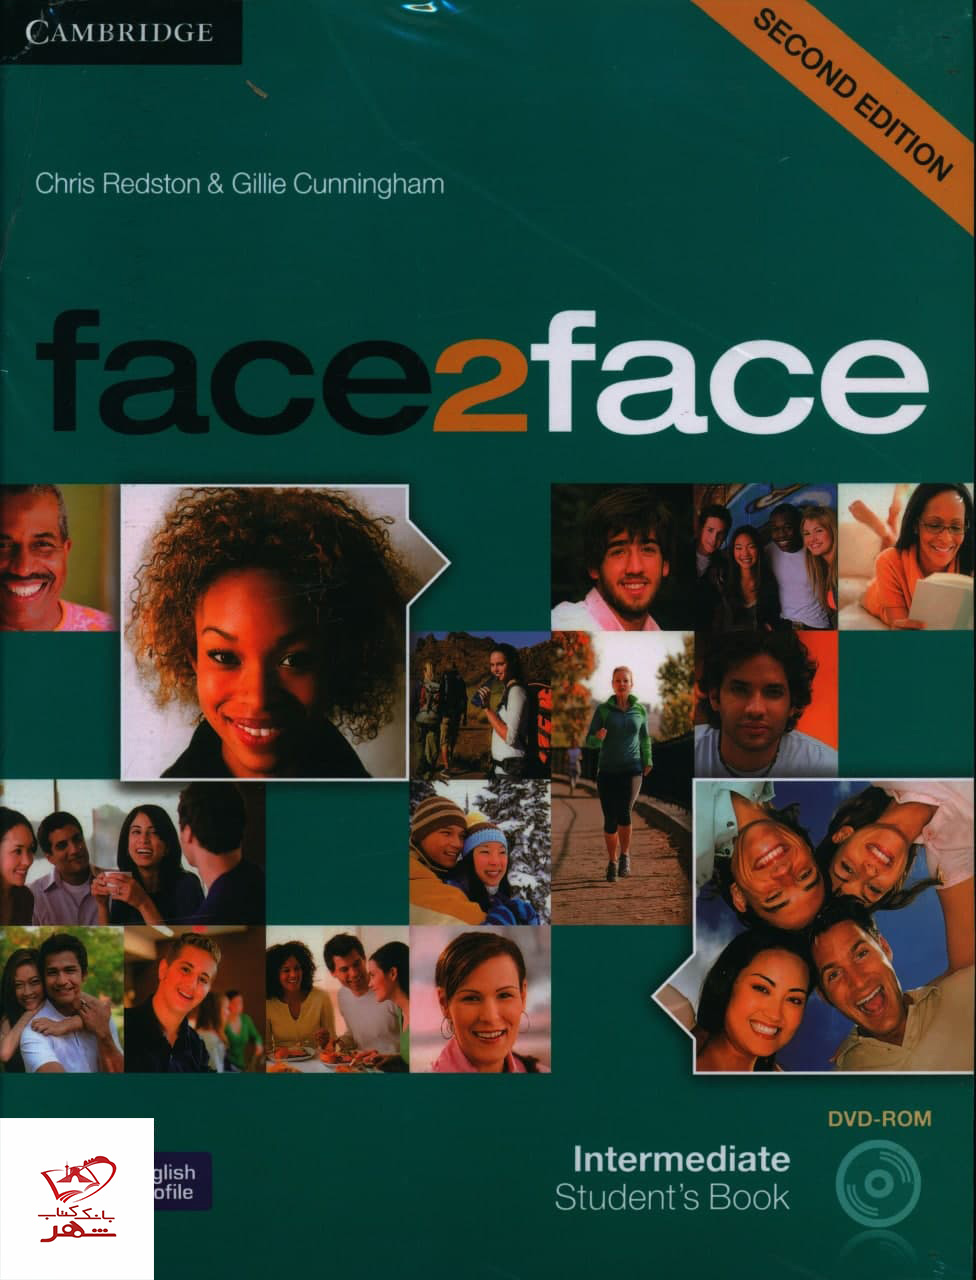 خرید کتاب Face 2 Face (Inter) از نشر جنگل